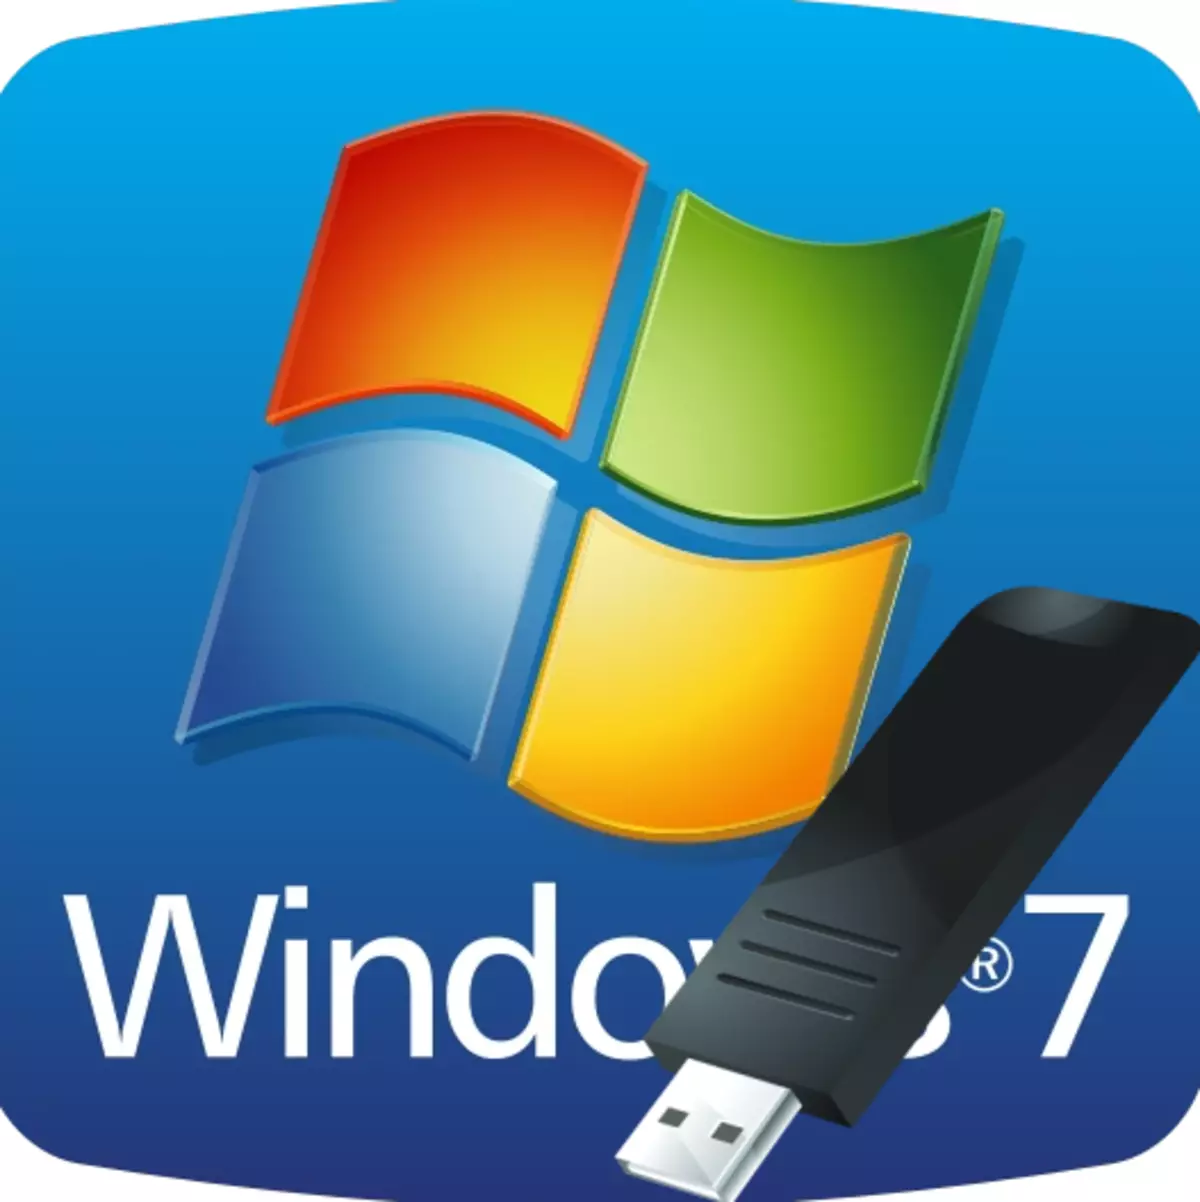 Meriv Windowsawa Windows 7 ji ajokera flash boot saz bike